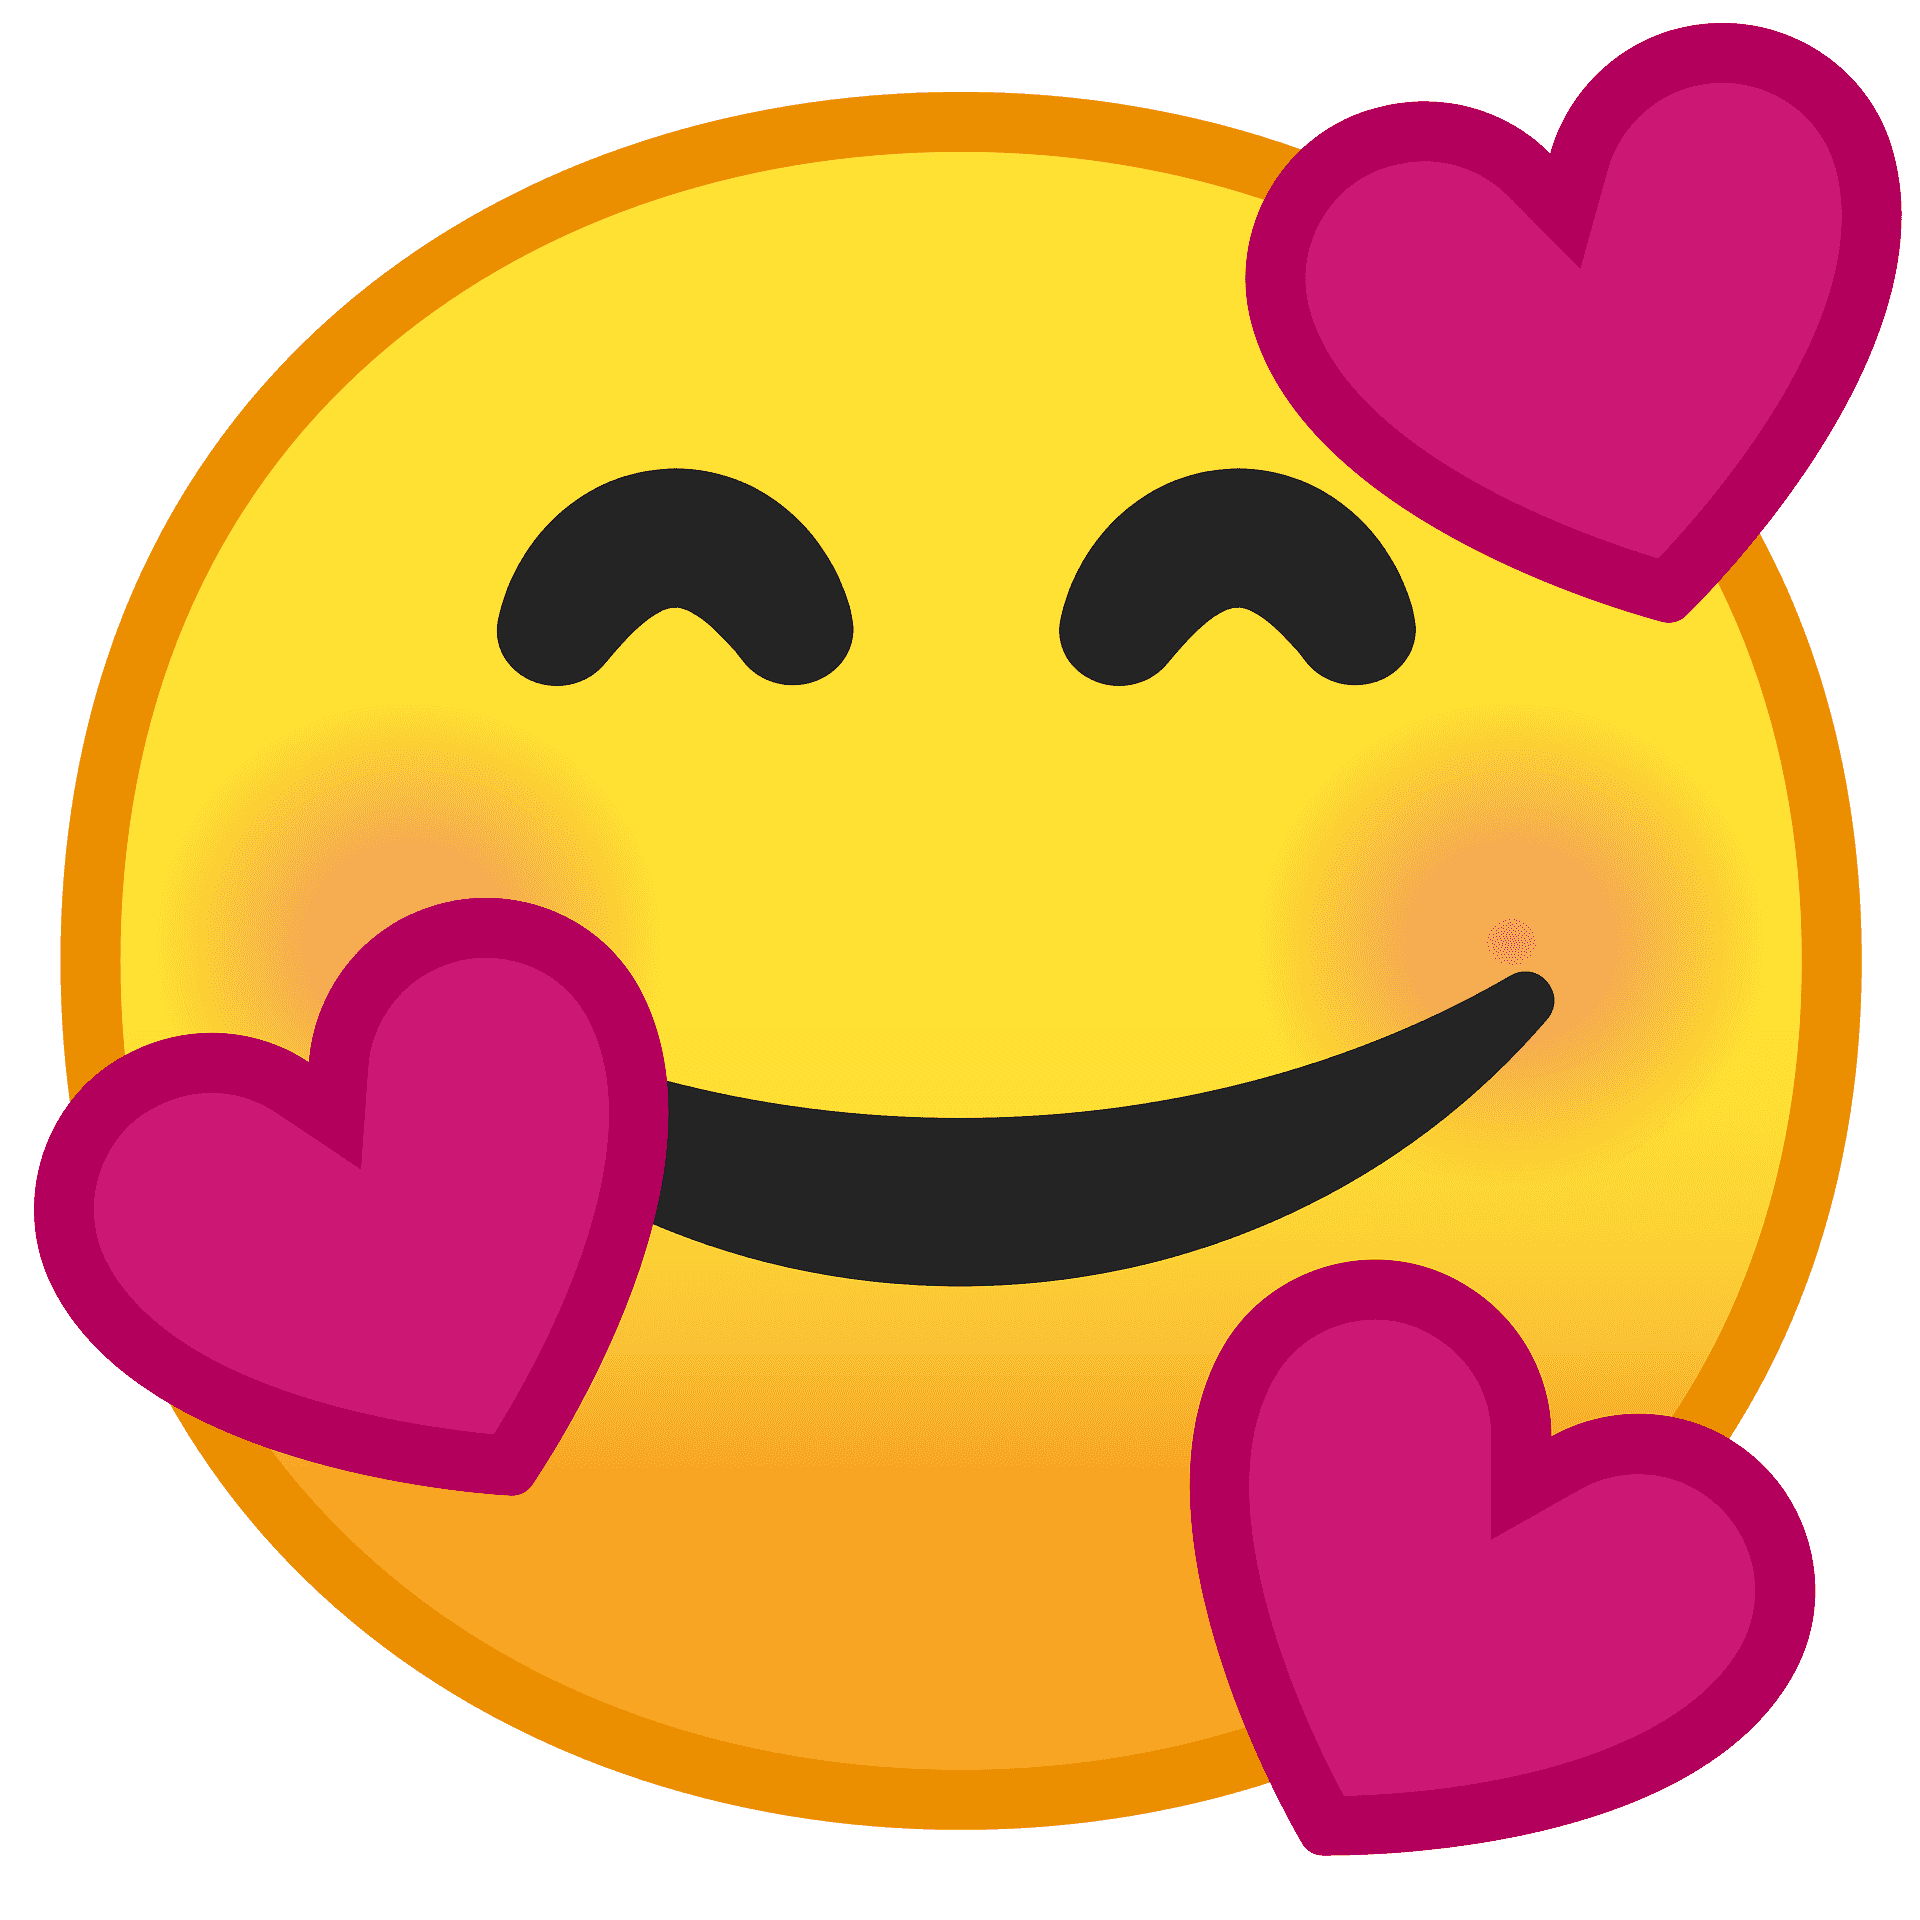 emoji with hearts